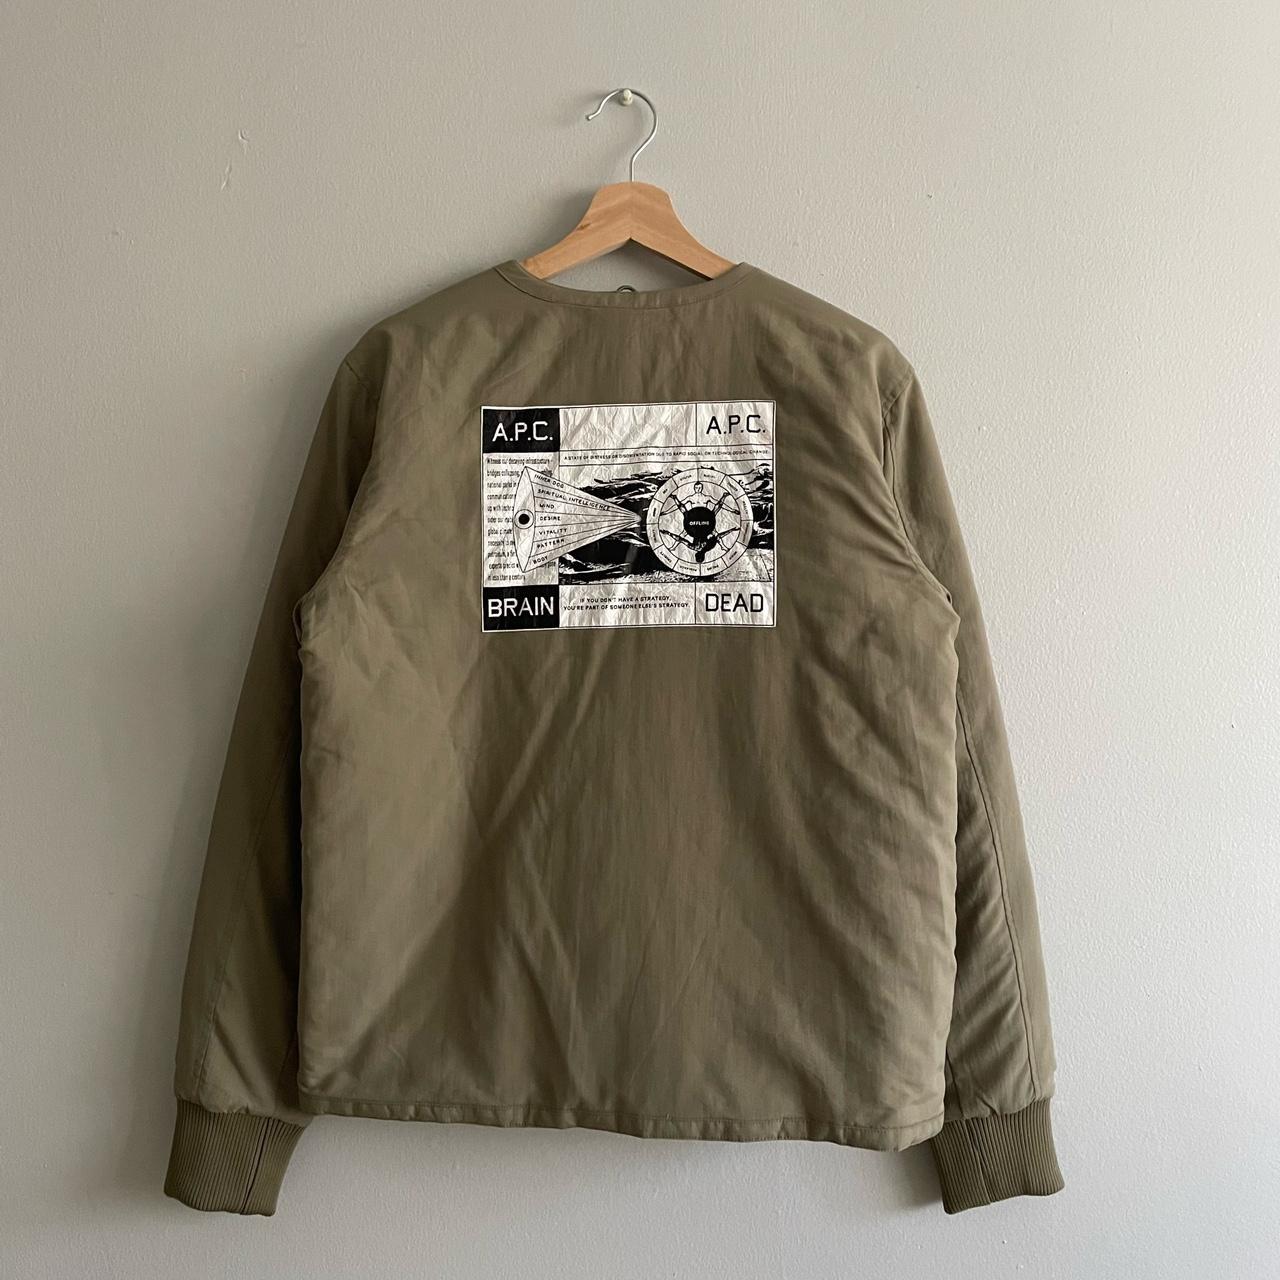 A.P.C. x Brain Dead bomber jacket, material is nylon - Depop